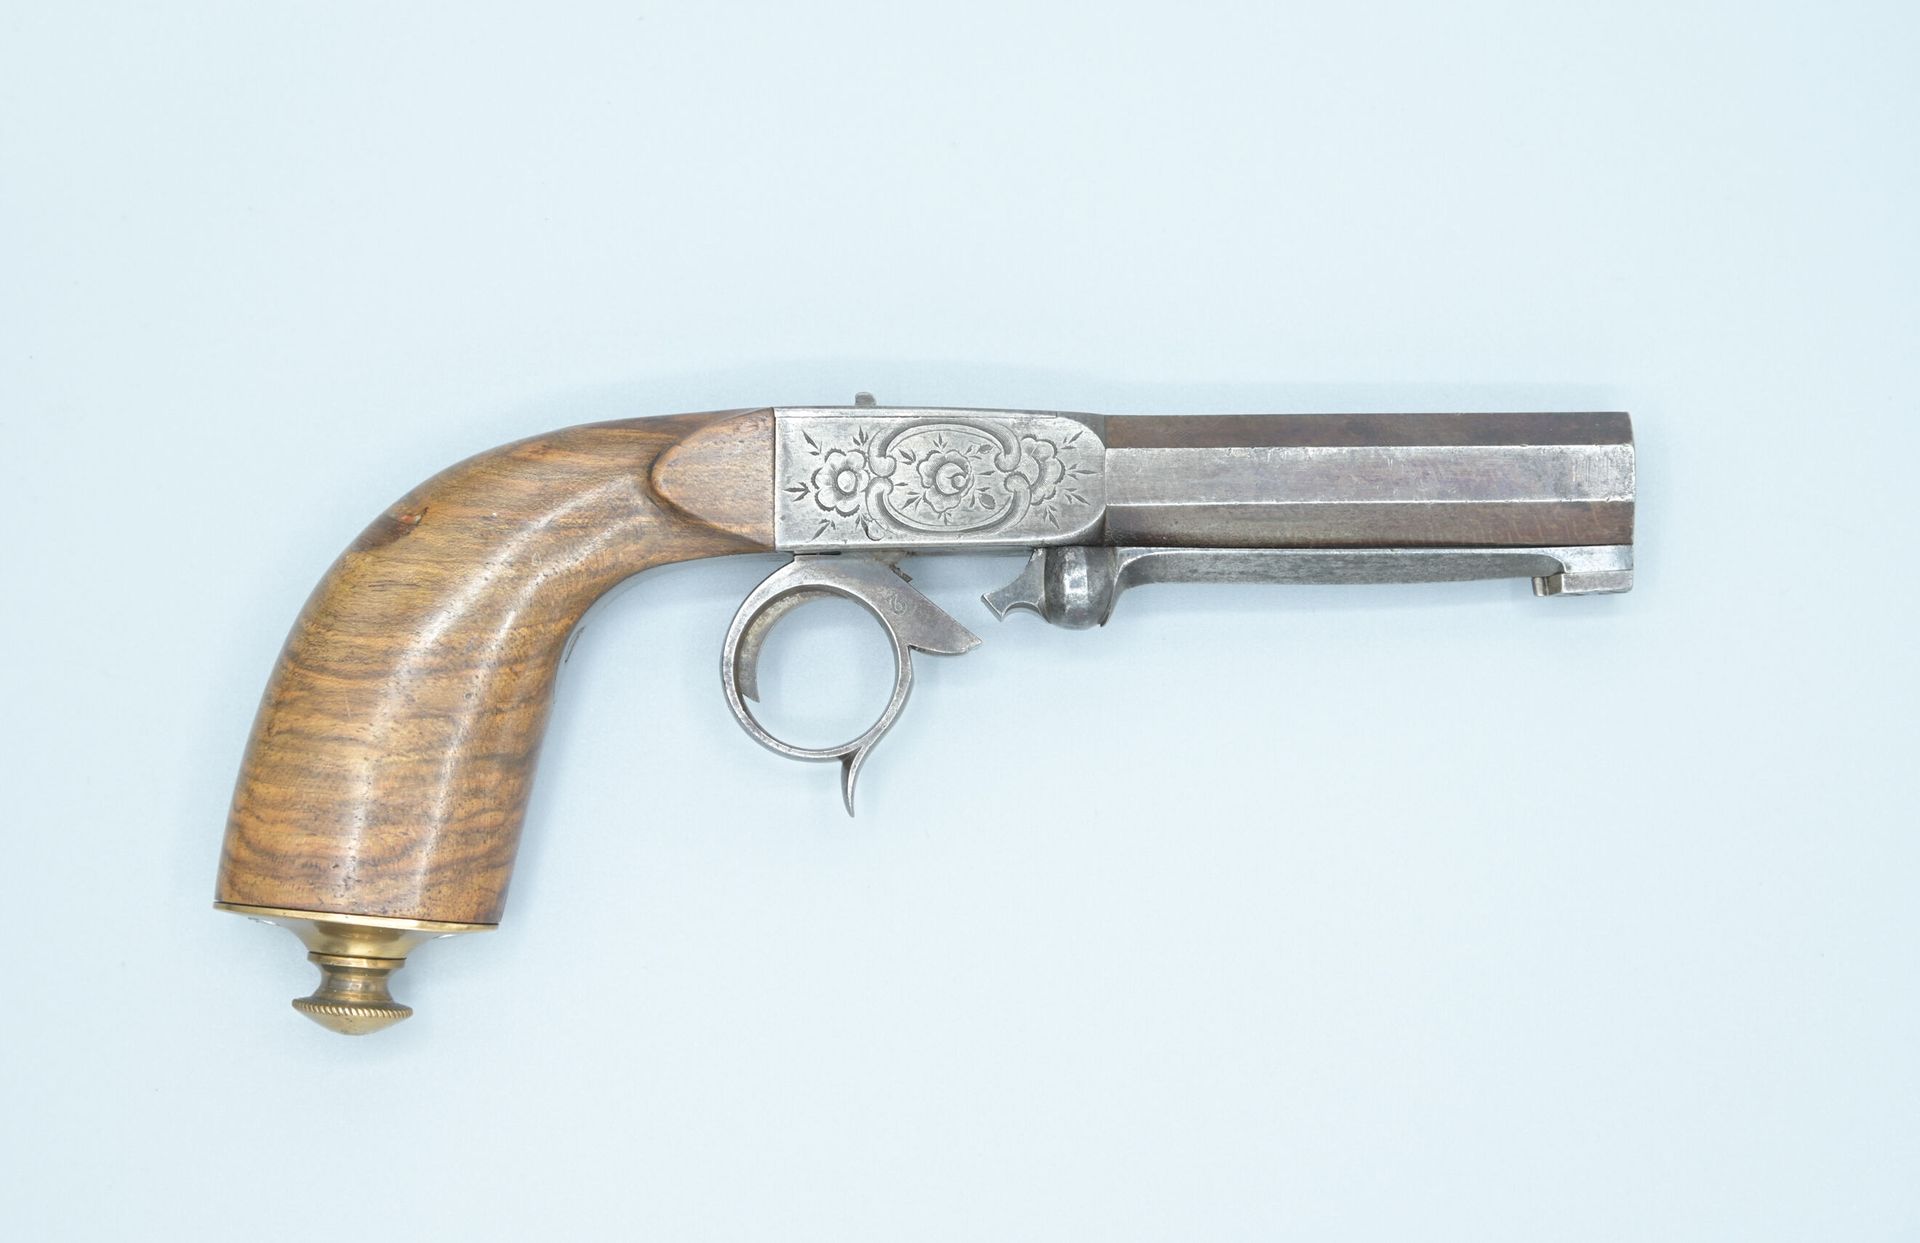 Null 打击式手枪。从枪管下方发射系统。环形扳机。雕刻的枪架和木质的枪托。枪托内有装弹杆。机械装置有待修订。大约在1830年。长度：18厘米